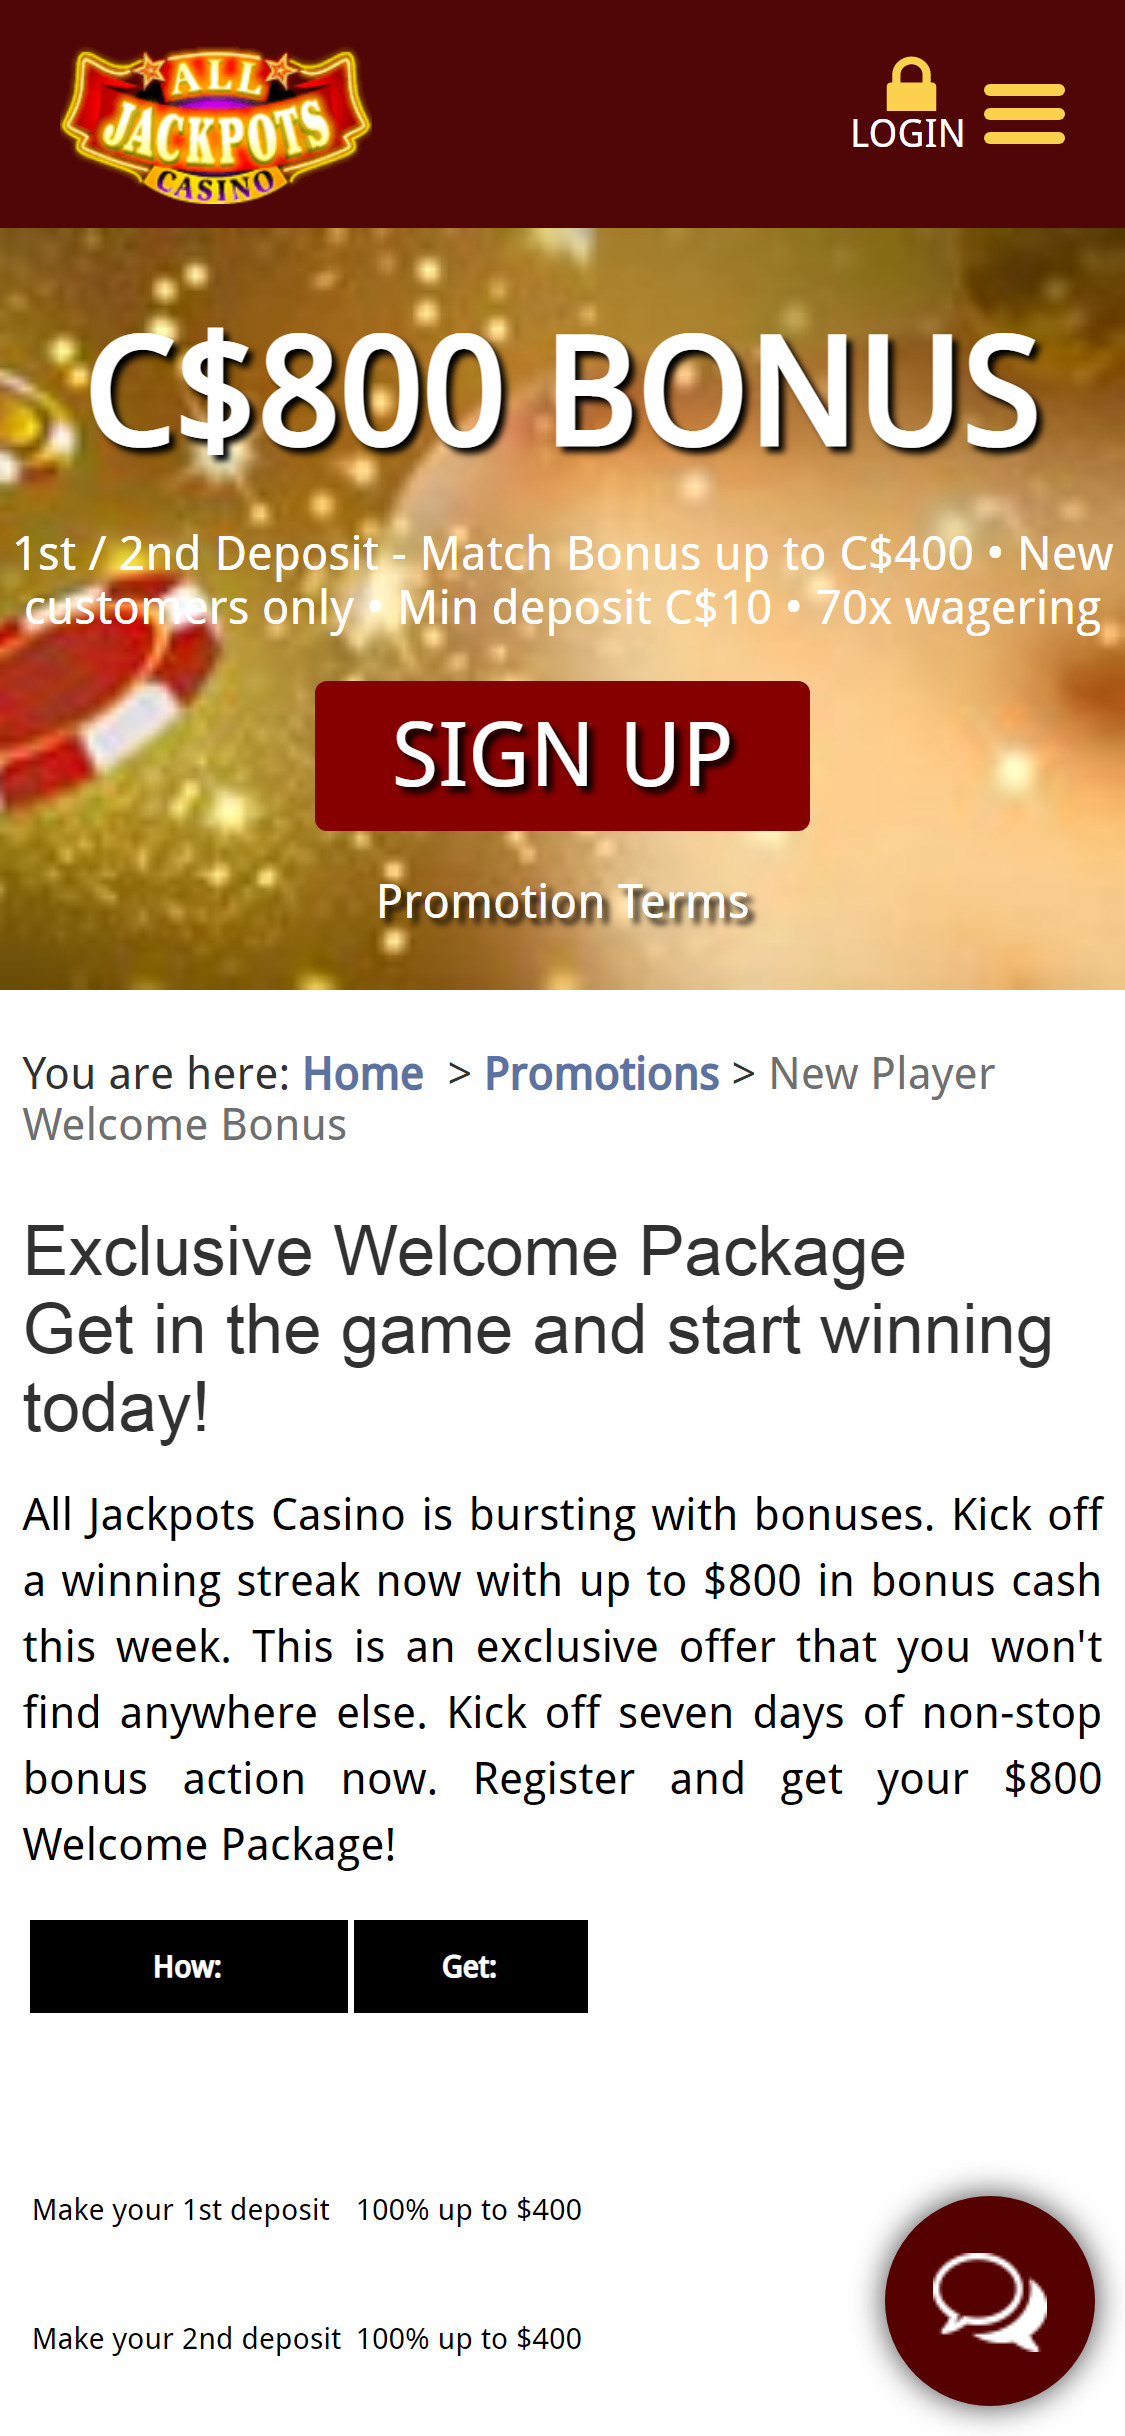 All Jackpots Casino Mobile No Deposit Bonus Review